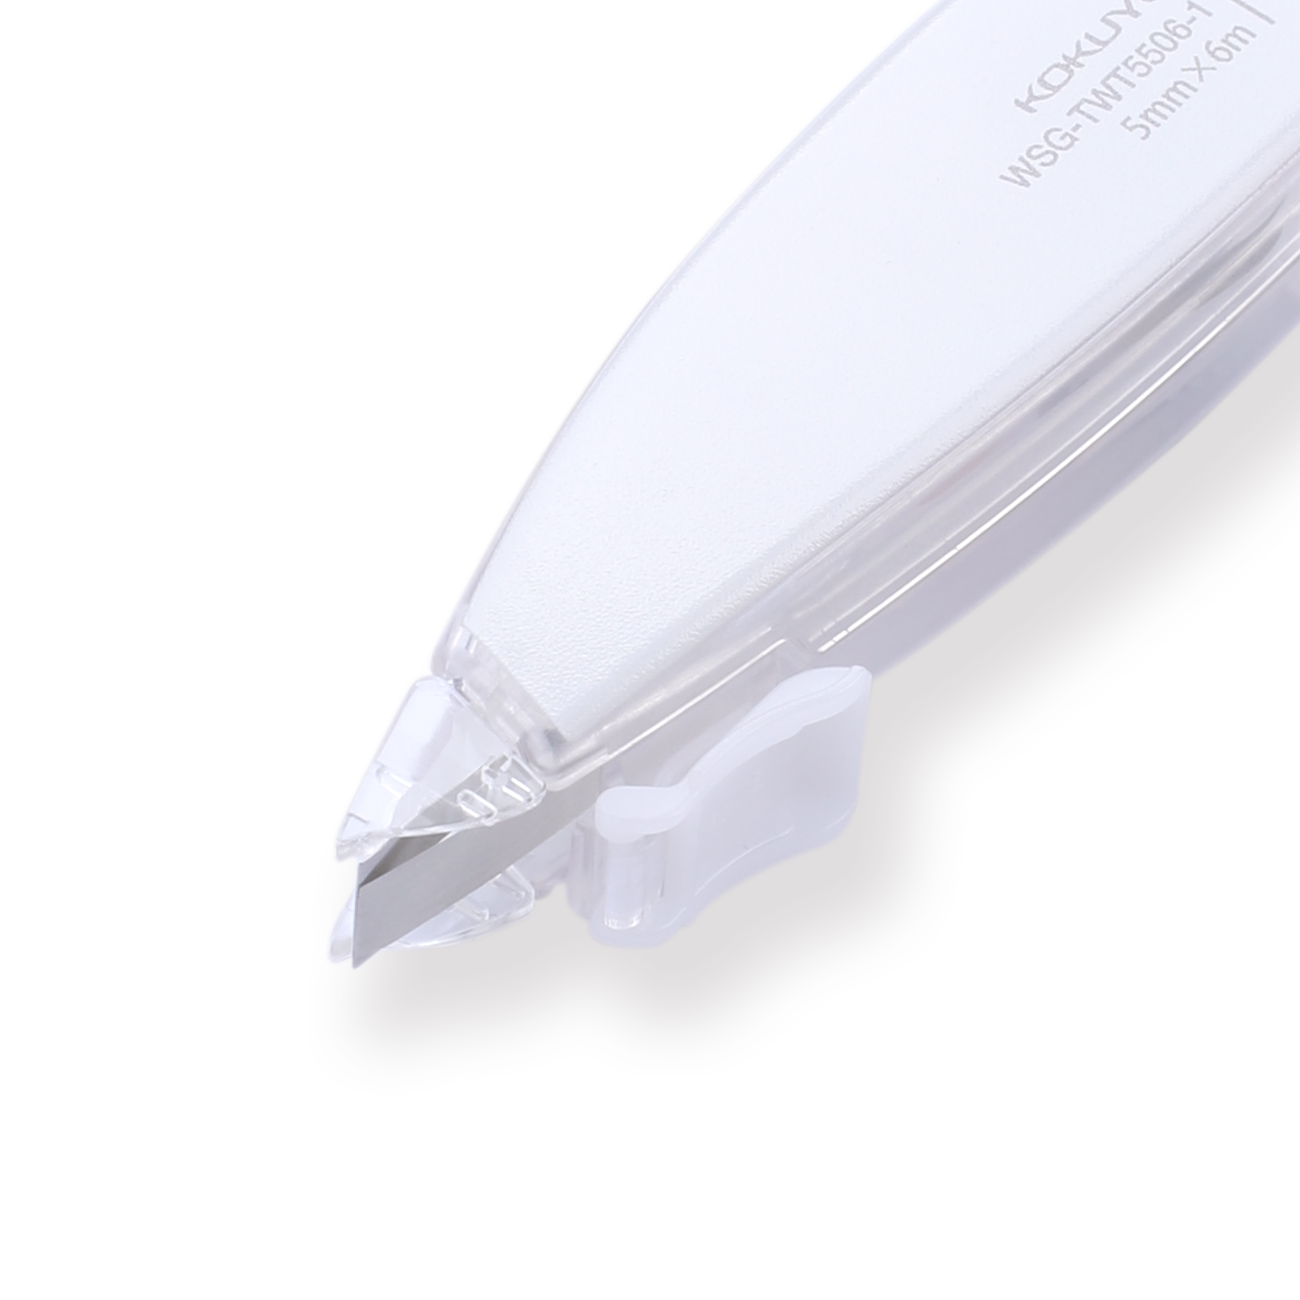 Kokuyo Campus Refillable Pen Correction Tape - White